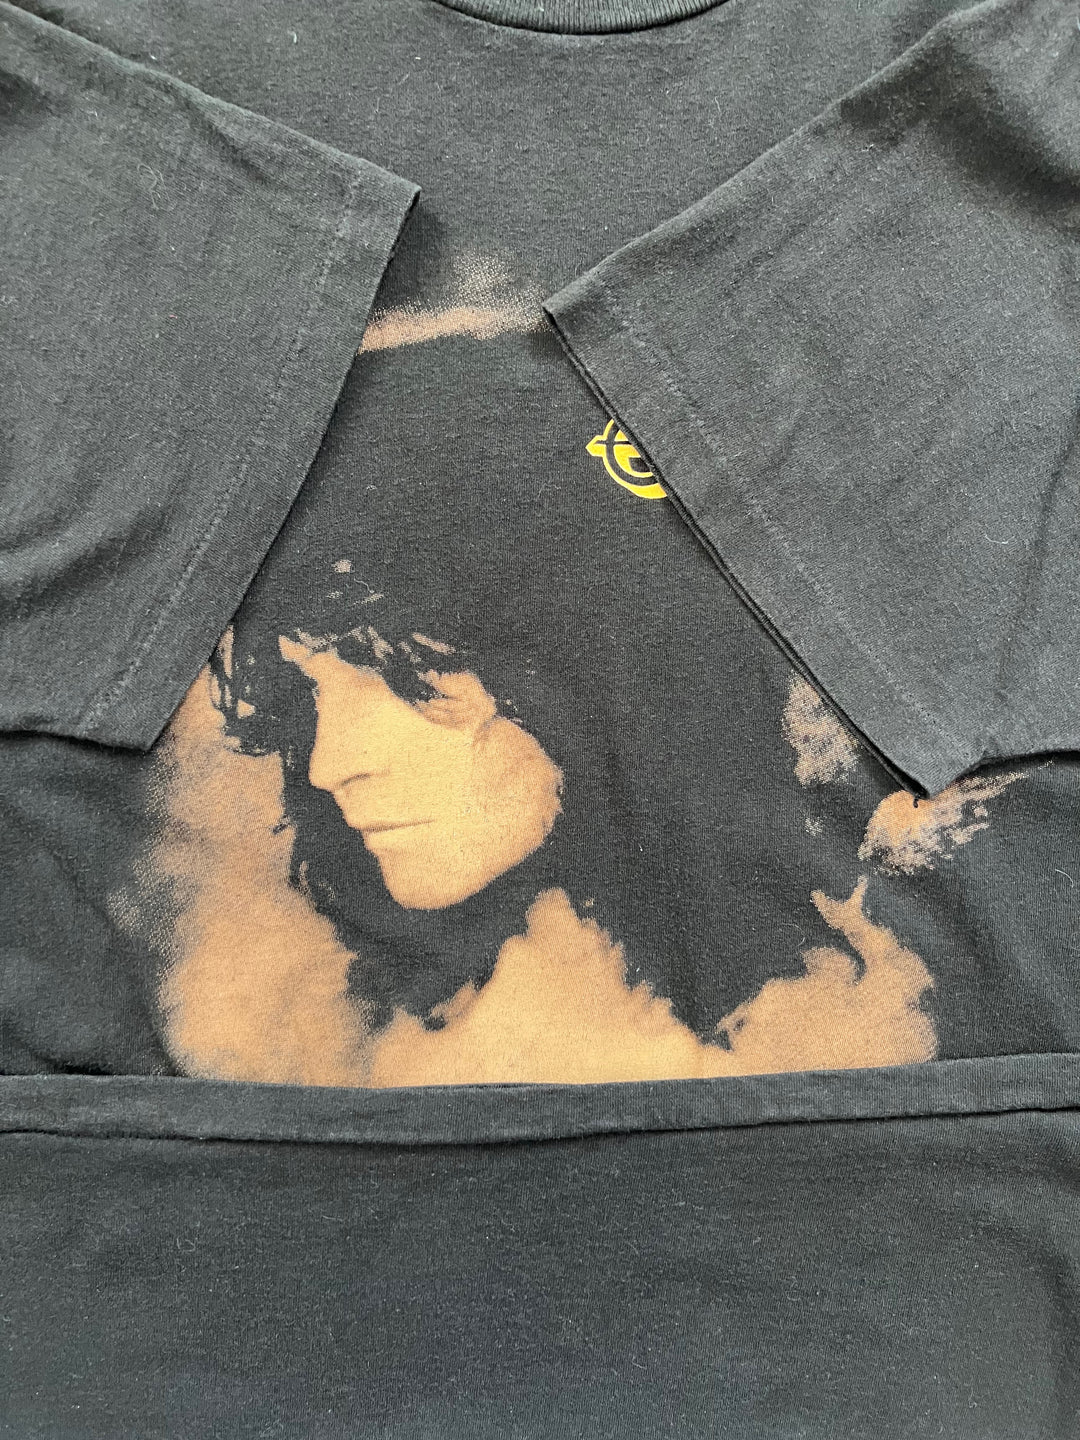 Vintage Ozzy Osbourne 1992  no more tour T-shirt. Large